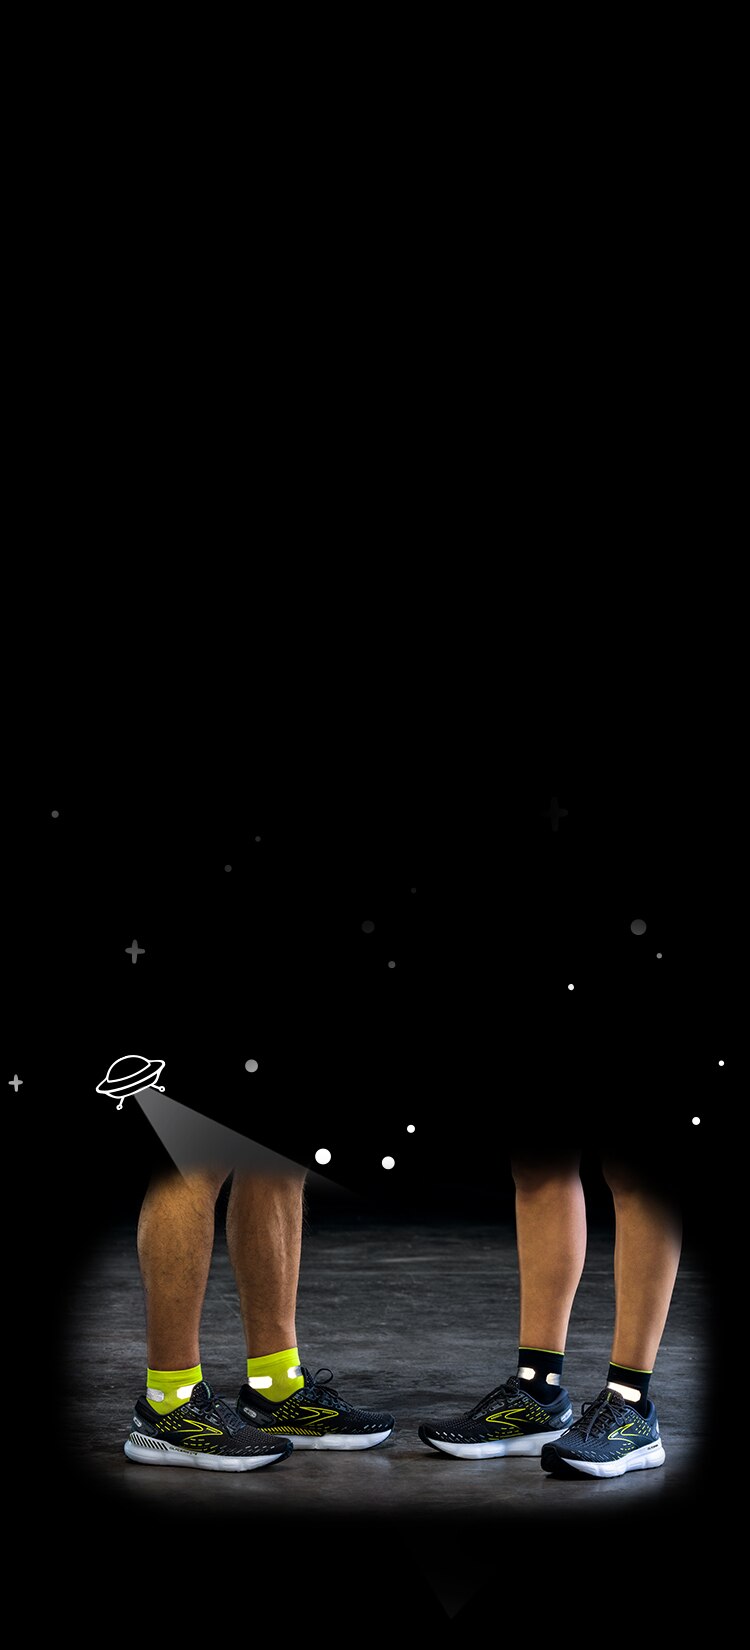 Dark background with UFO illustration shining light on reflective running gear